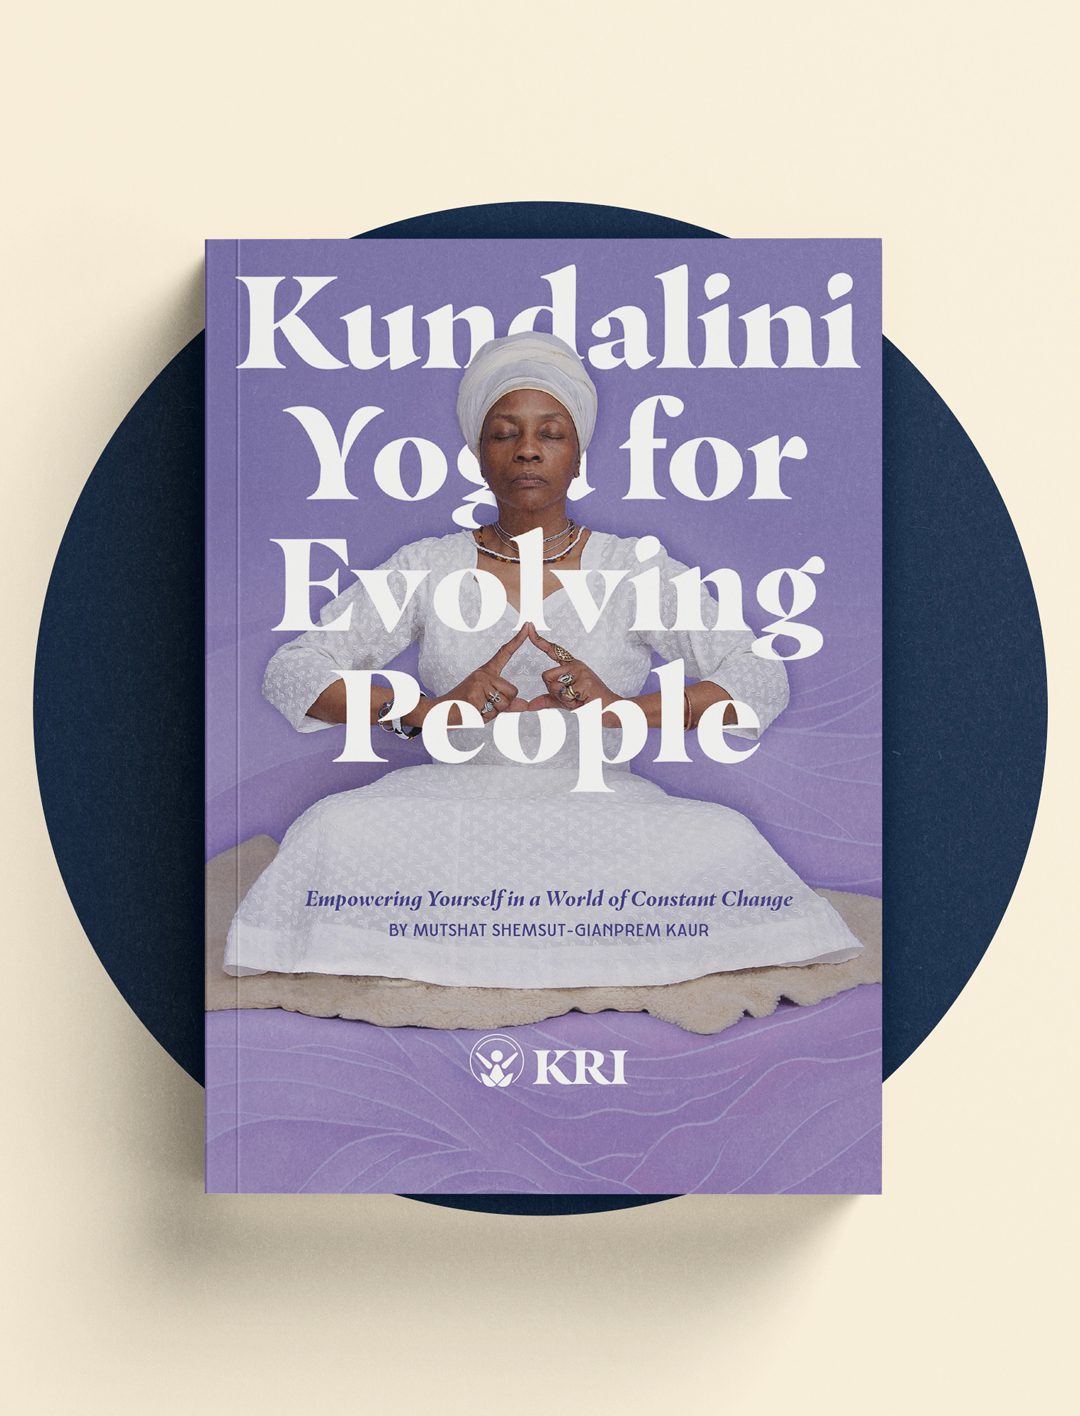 Kundalini Yoga for Evolving People - The Kundalini Research Institute